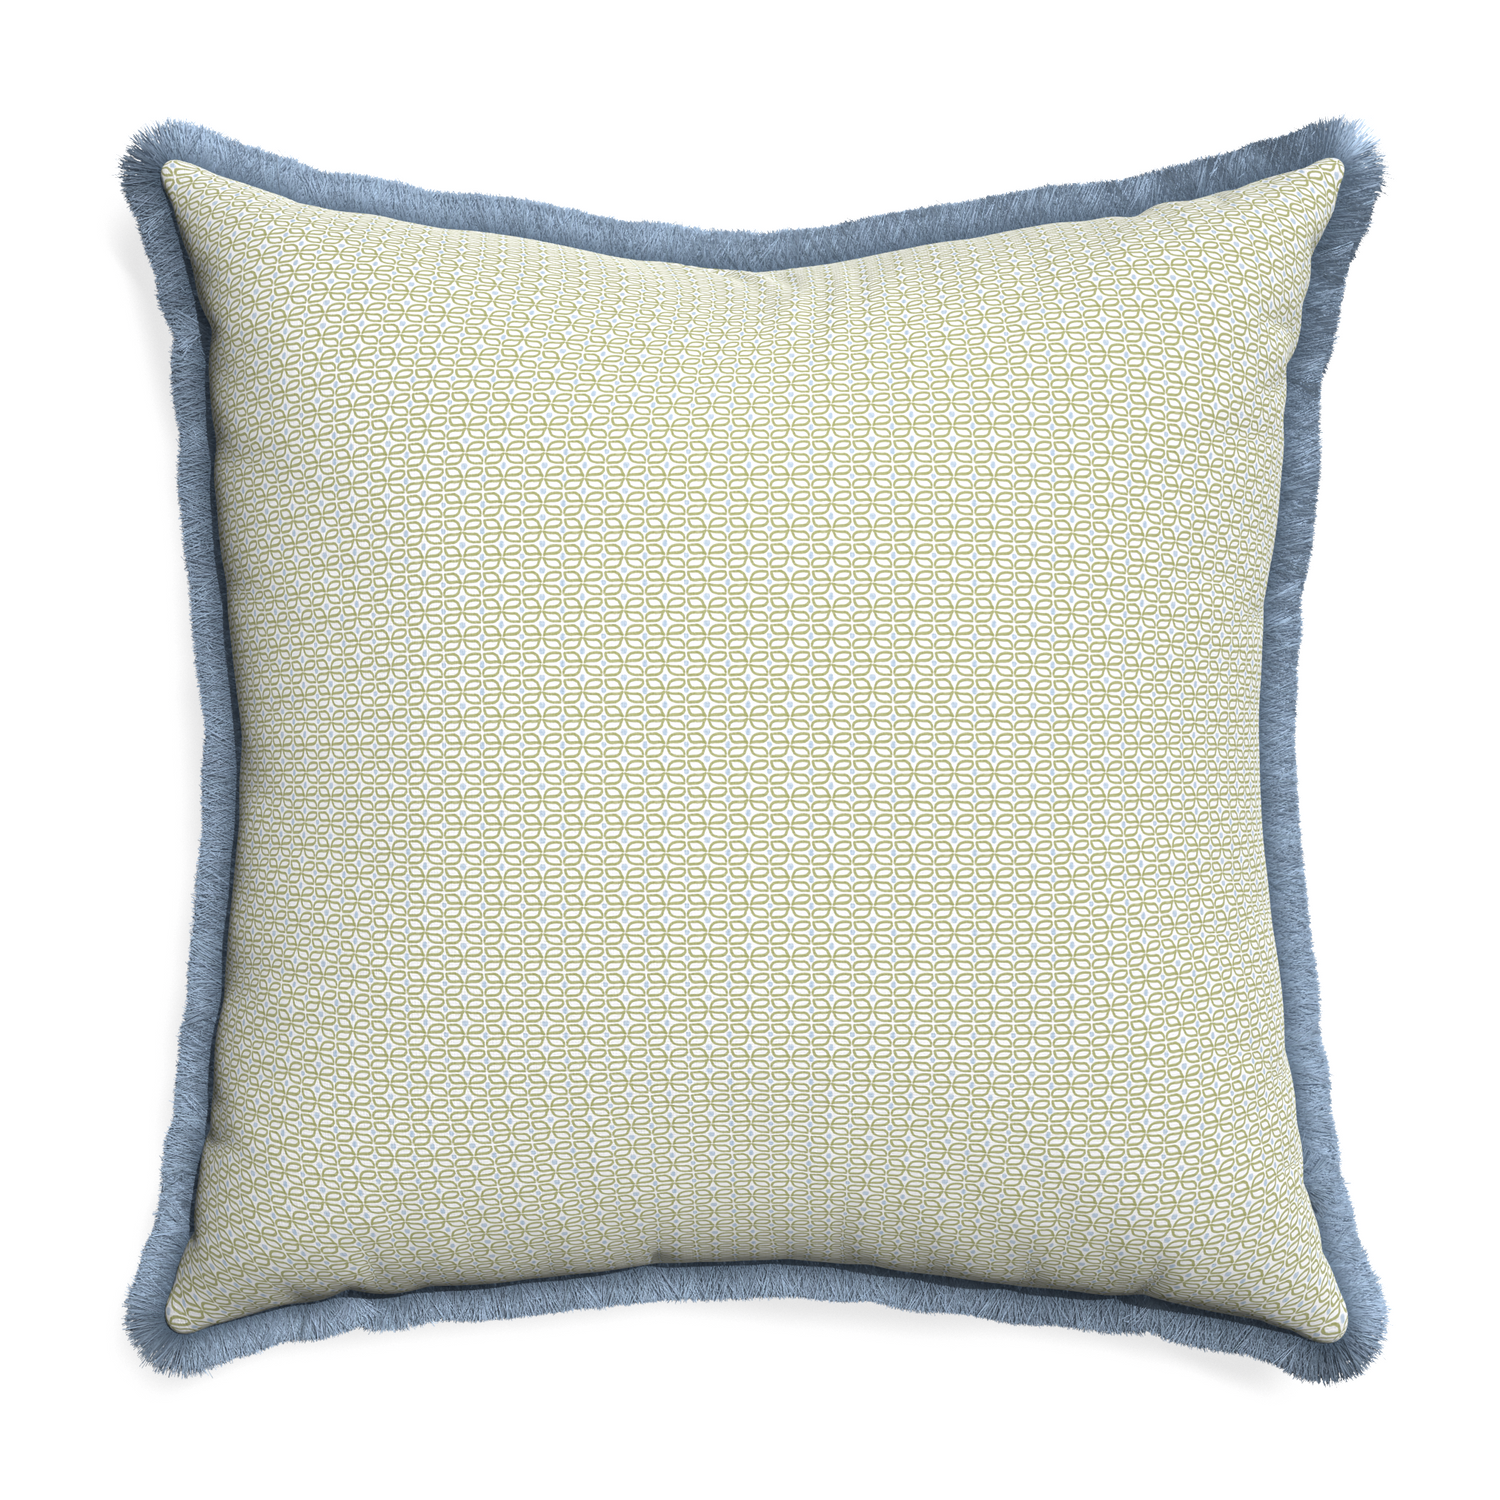 Euro-sham loomi moss custom pillow with sky fringe on white background